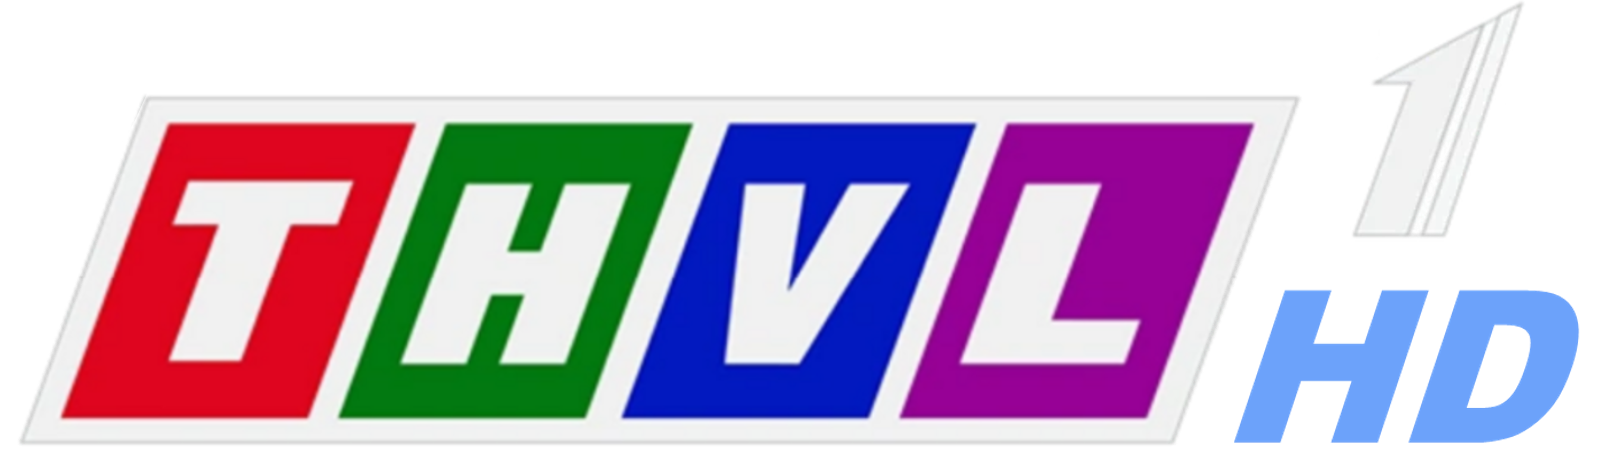 THVL1 HD | Wikia Logos | Fandom